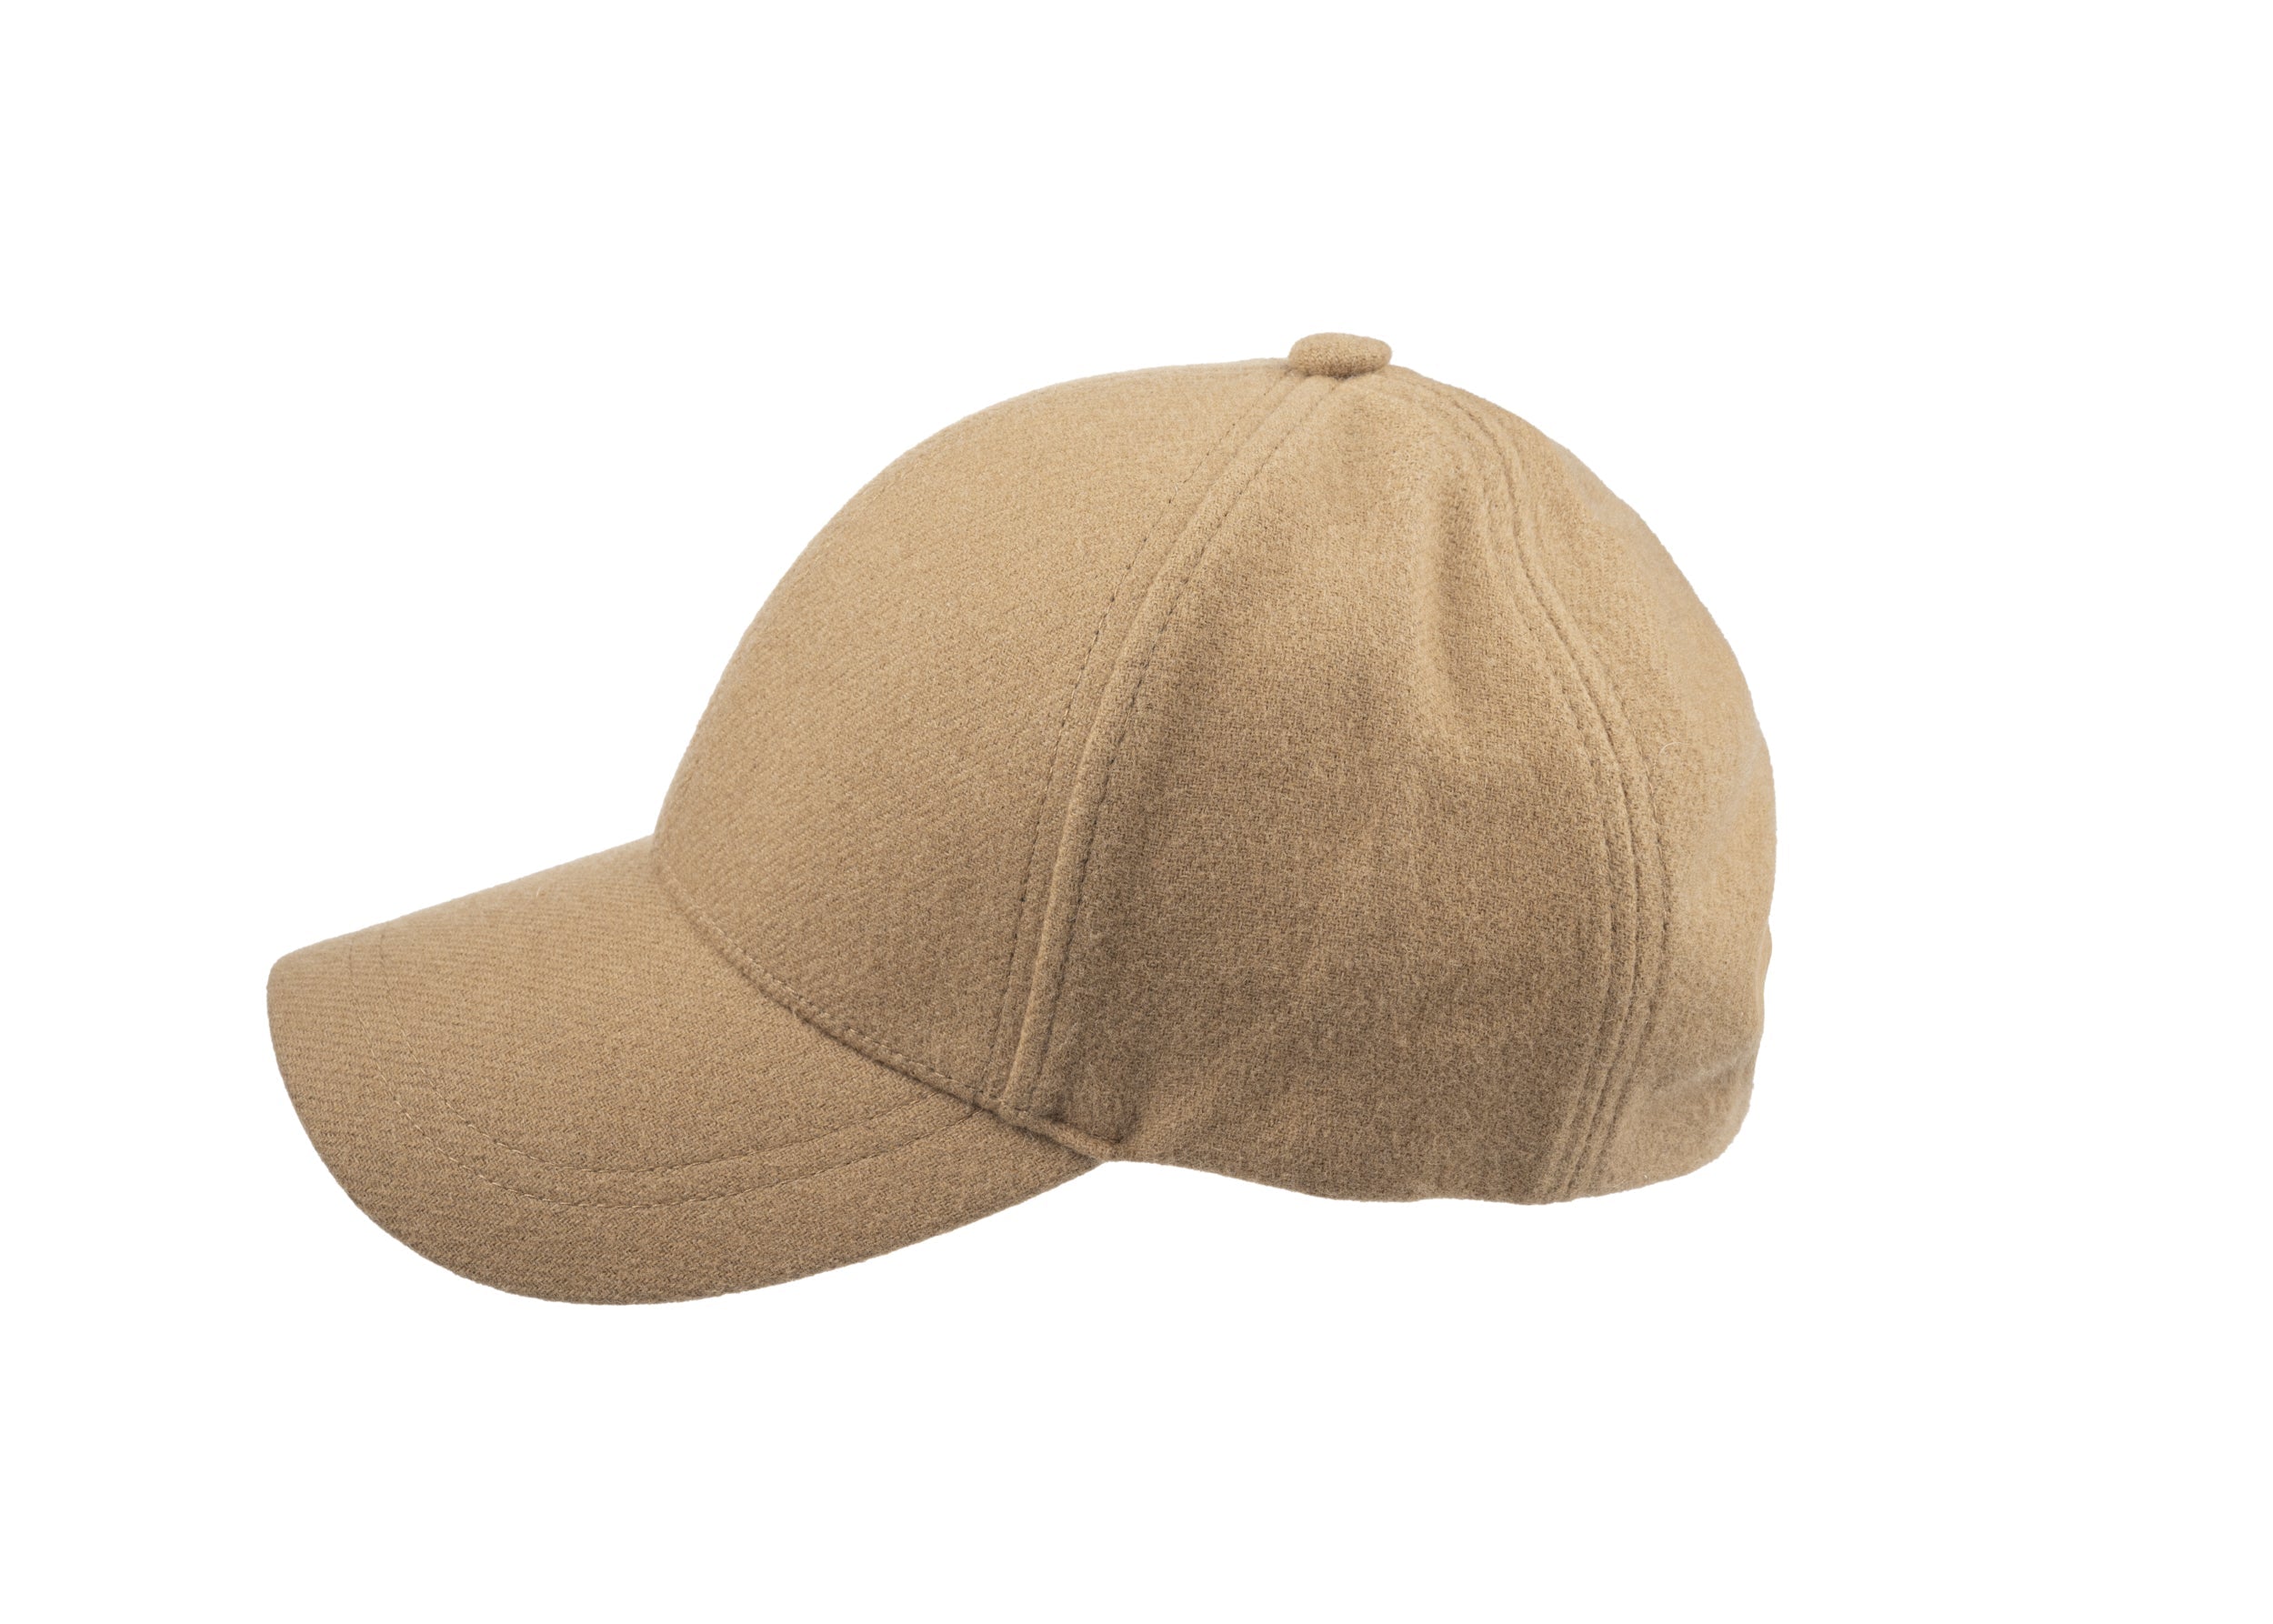 Josh baseball cap in cashmere/wool blend fabric in Camel